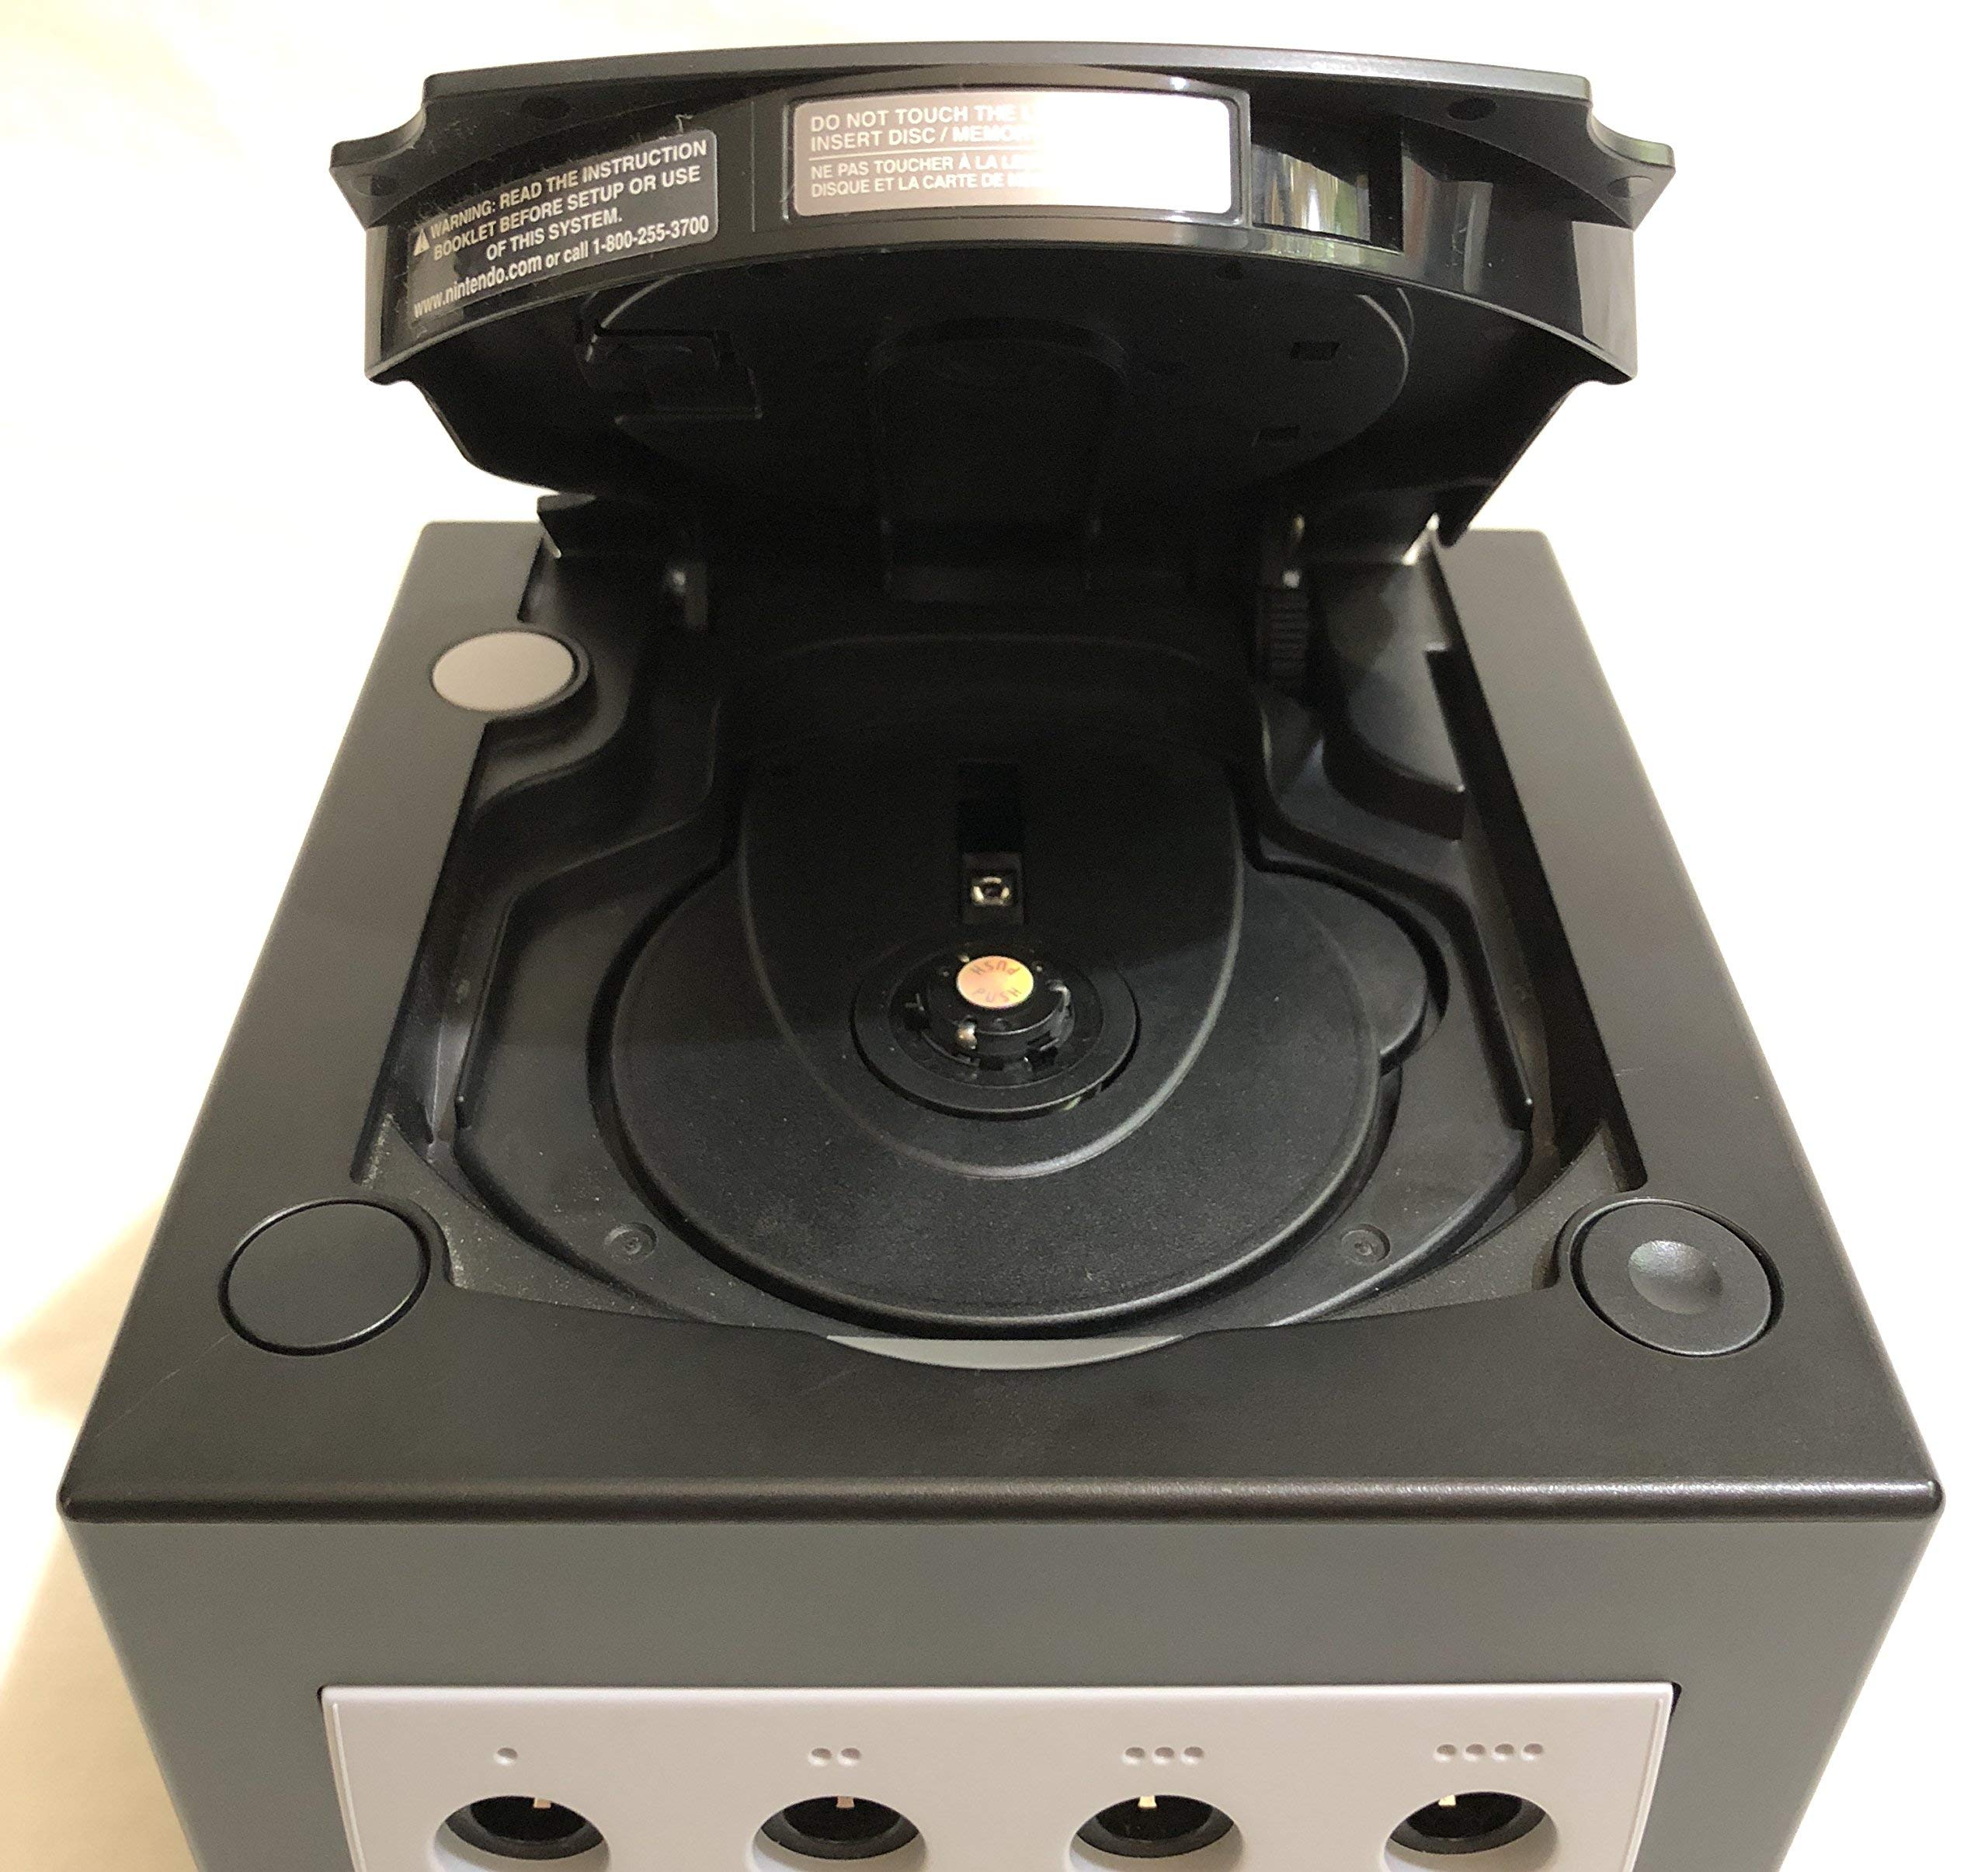 Nintendo Gamecube System Console - Jet Black (Renewed)